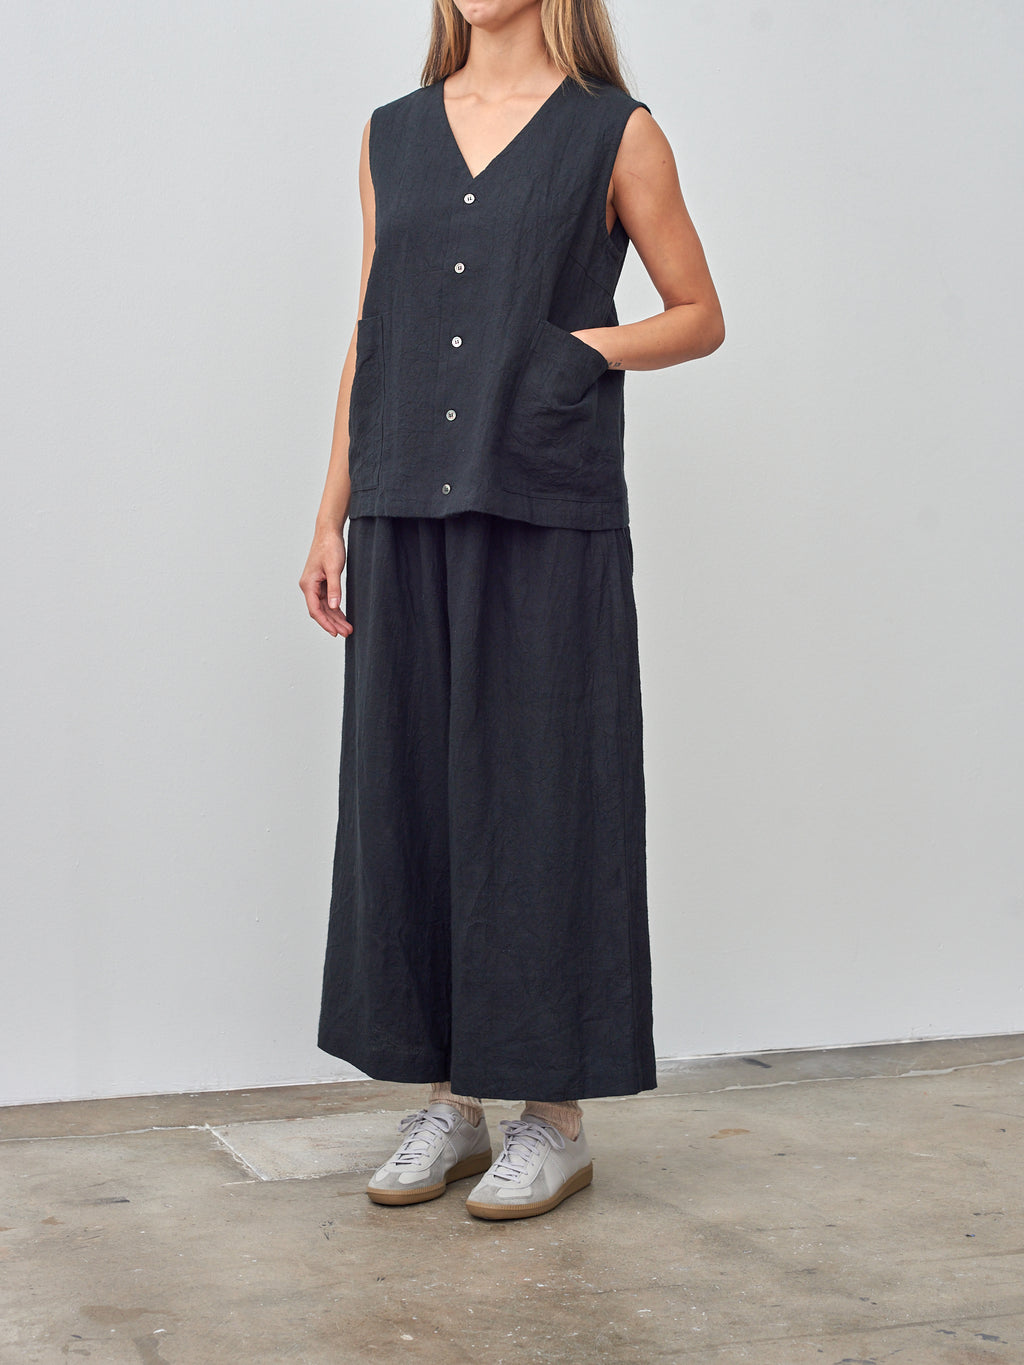 Namu Shop - Ichi Antiquites Linen Vintage Vest - Black